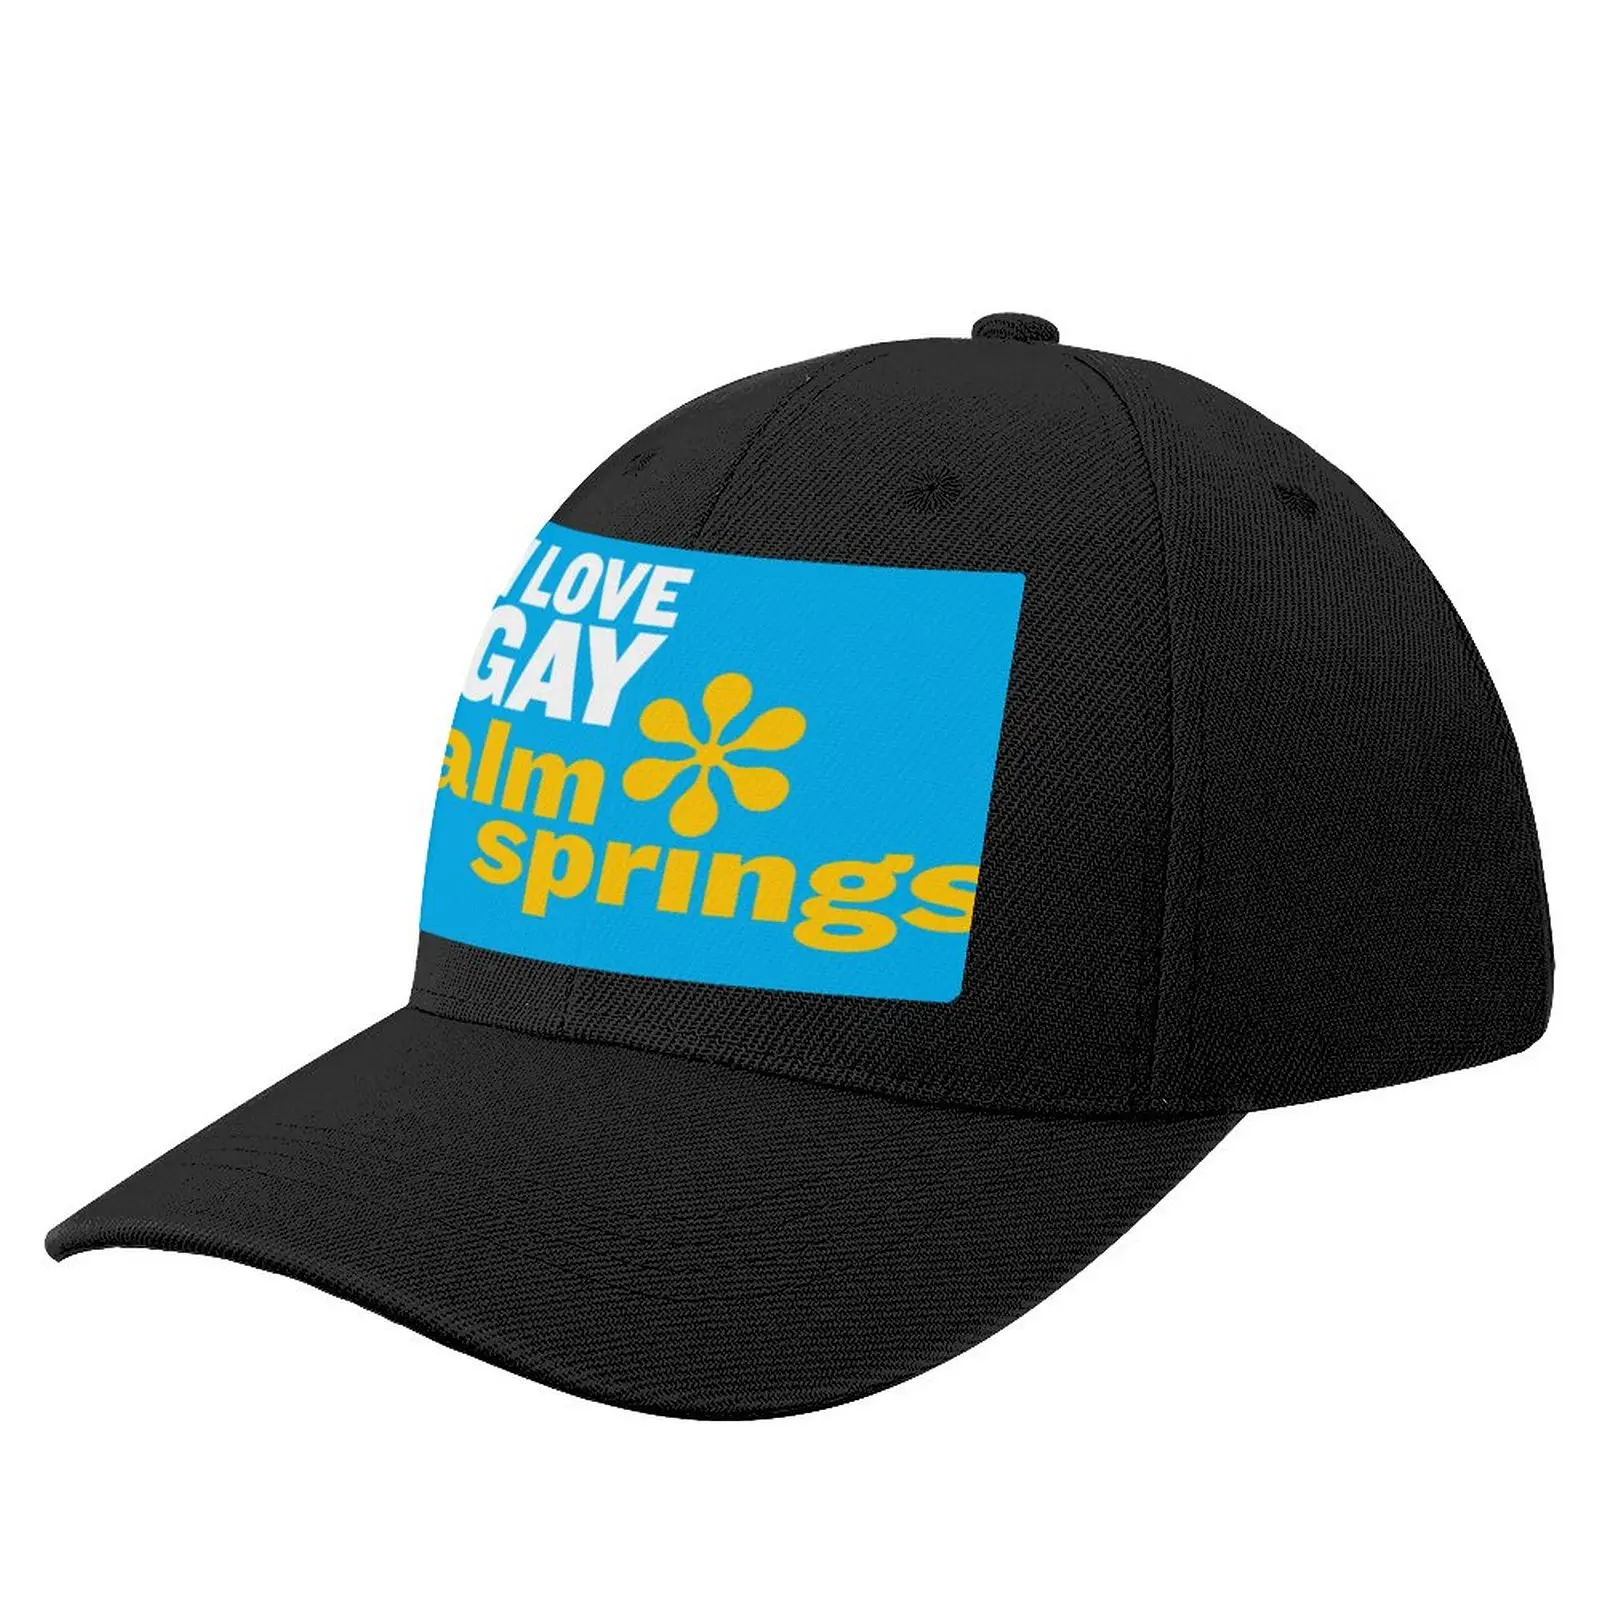 

#I LOVE GAY Palm Springs Clothing Baseball Cap New Hat Kids Hat Hat For Men Women's